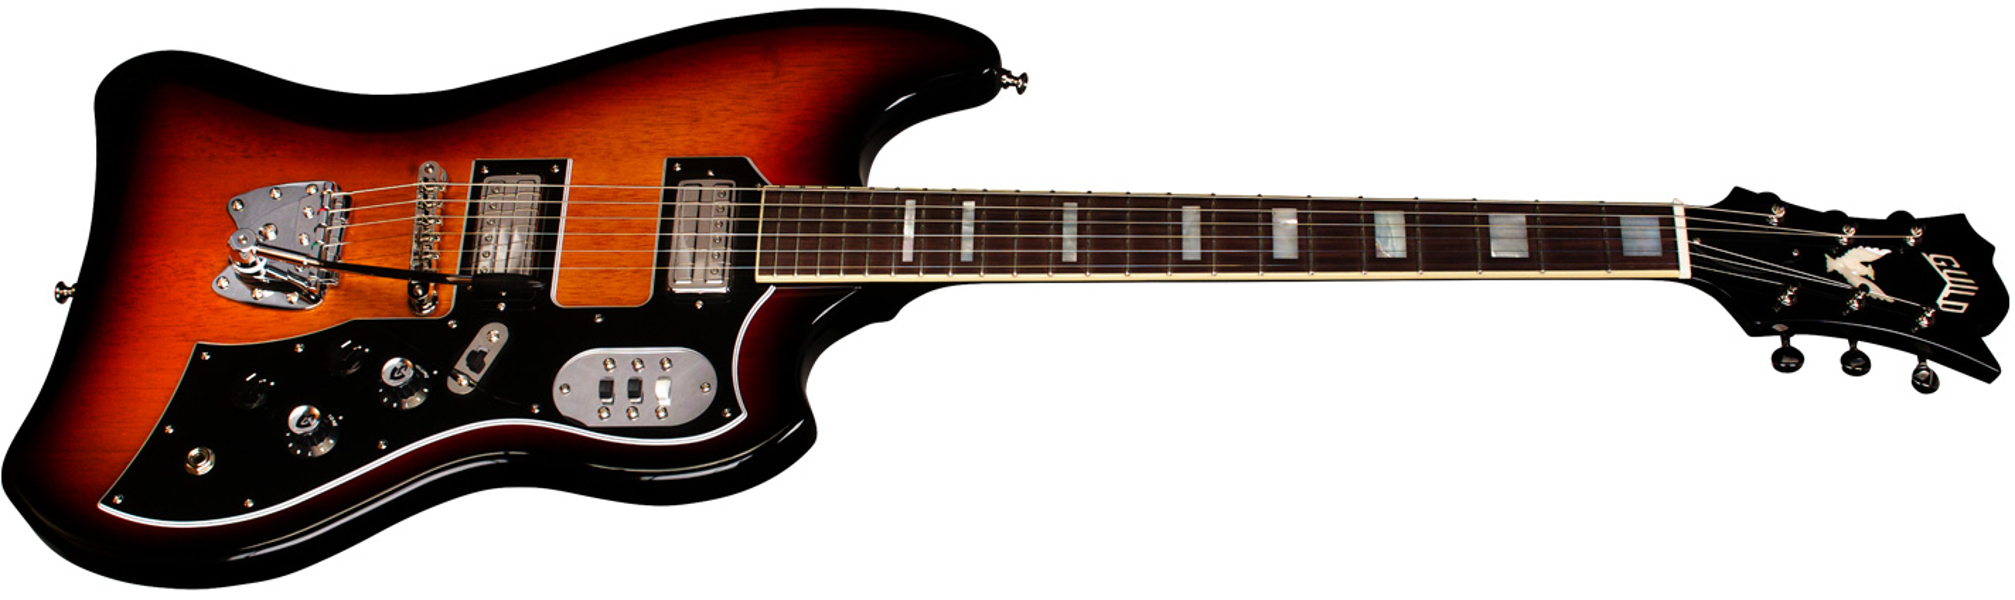 Guild S-200 T-bird - Antique Burst - Retro-rock elektrische gitaar - Variation 1